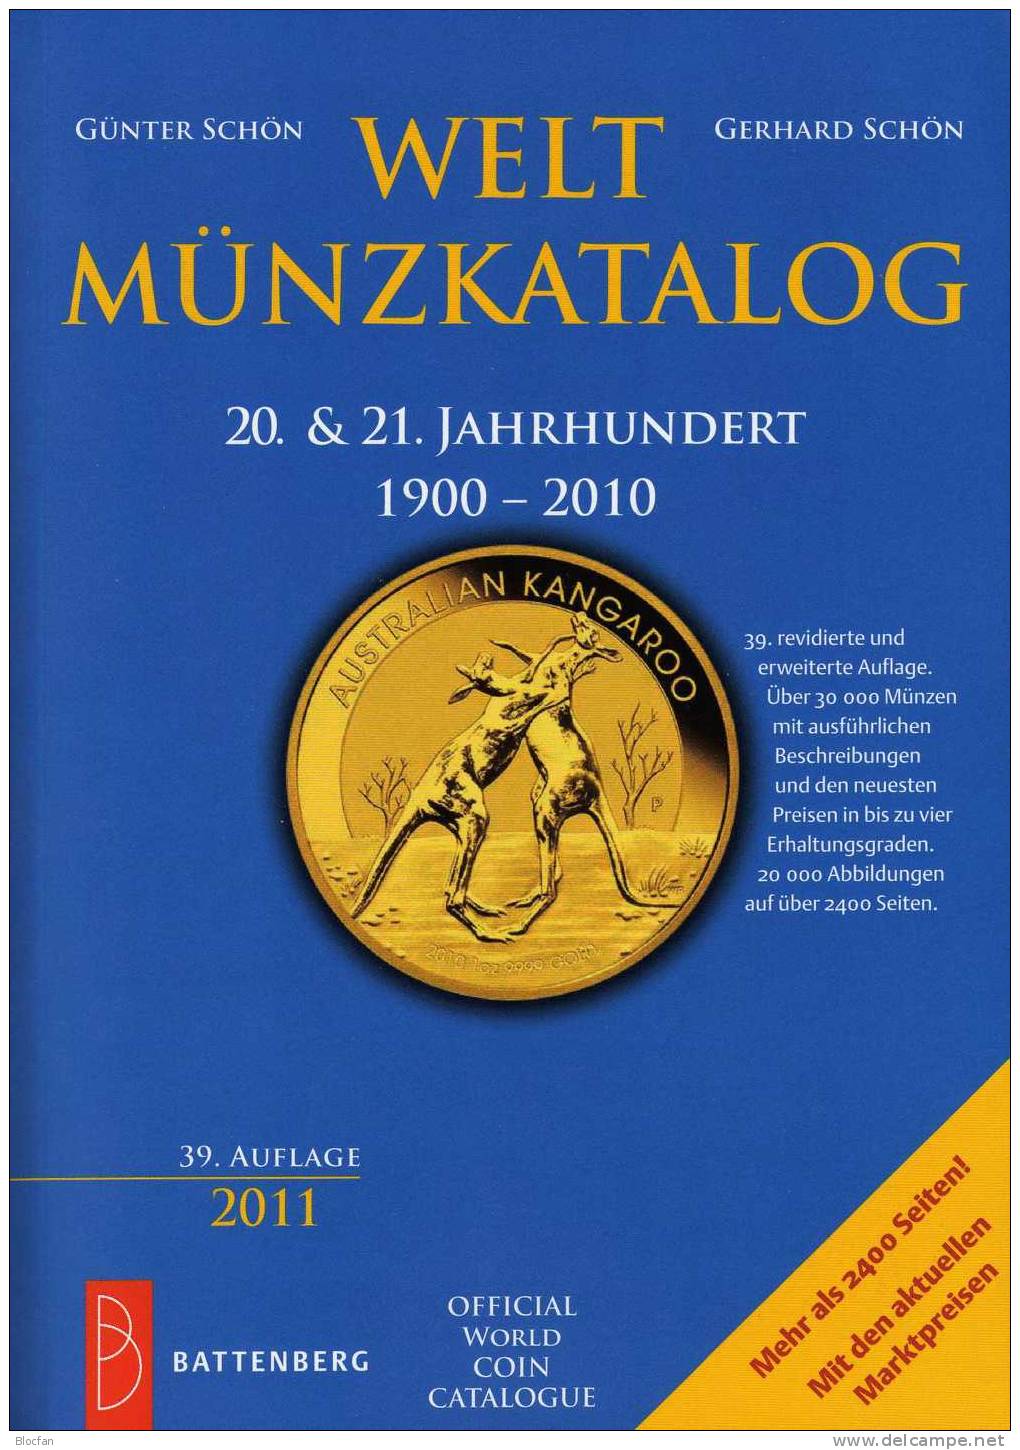 Weltmünzkatalog Schön 2011 neu 50€ Münzen des 20.Jahrhundert A-Z Battenberg Verlag Europa Amerika Afrika Asien Ozeanien